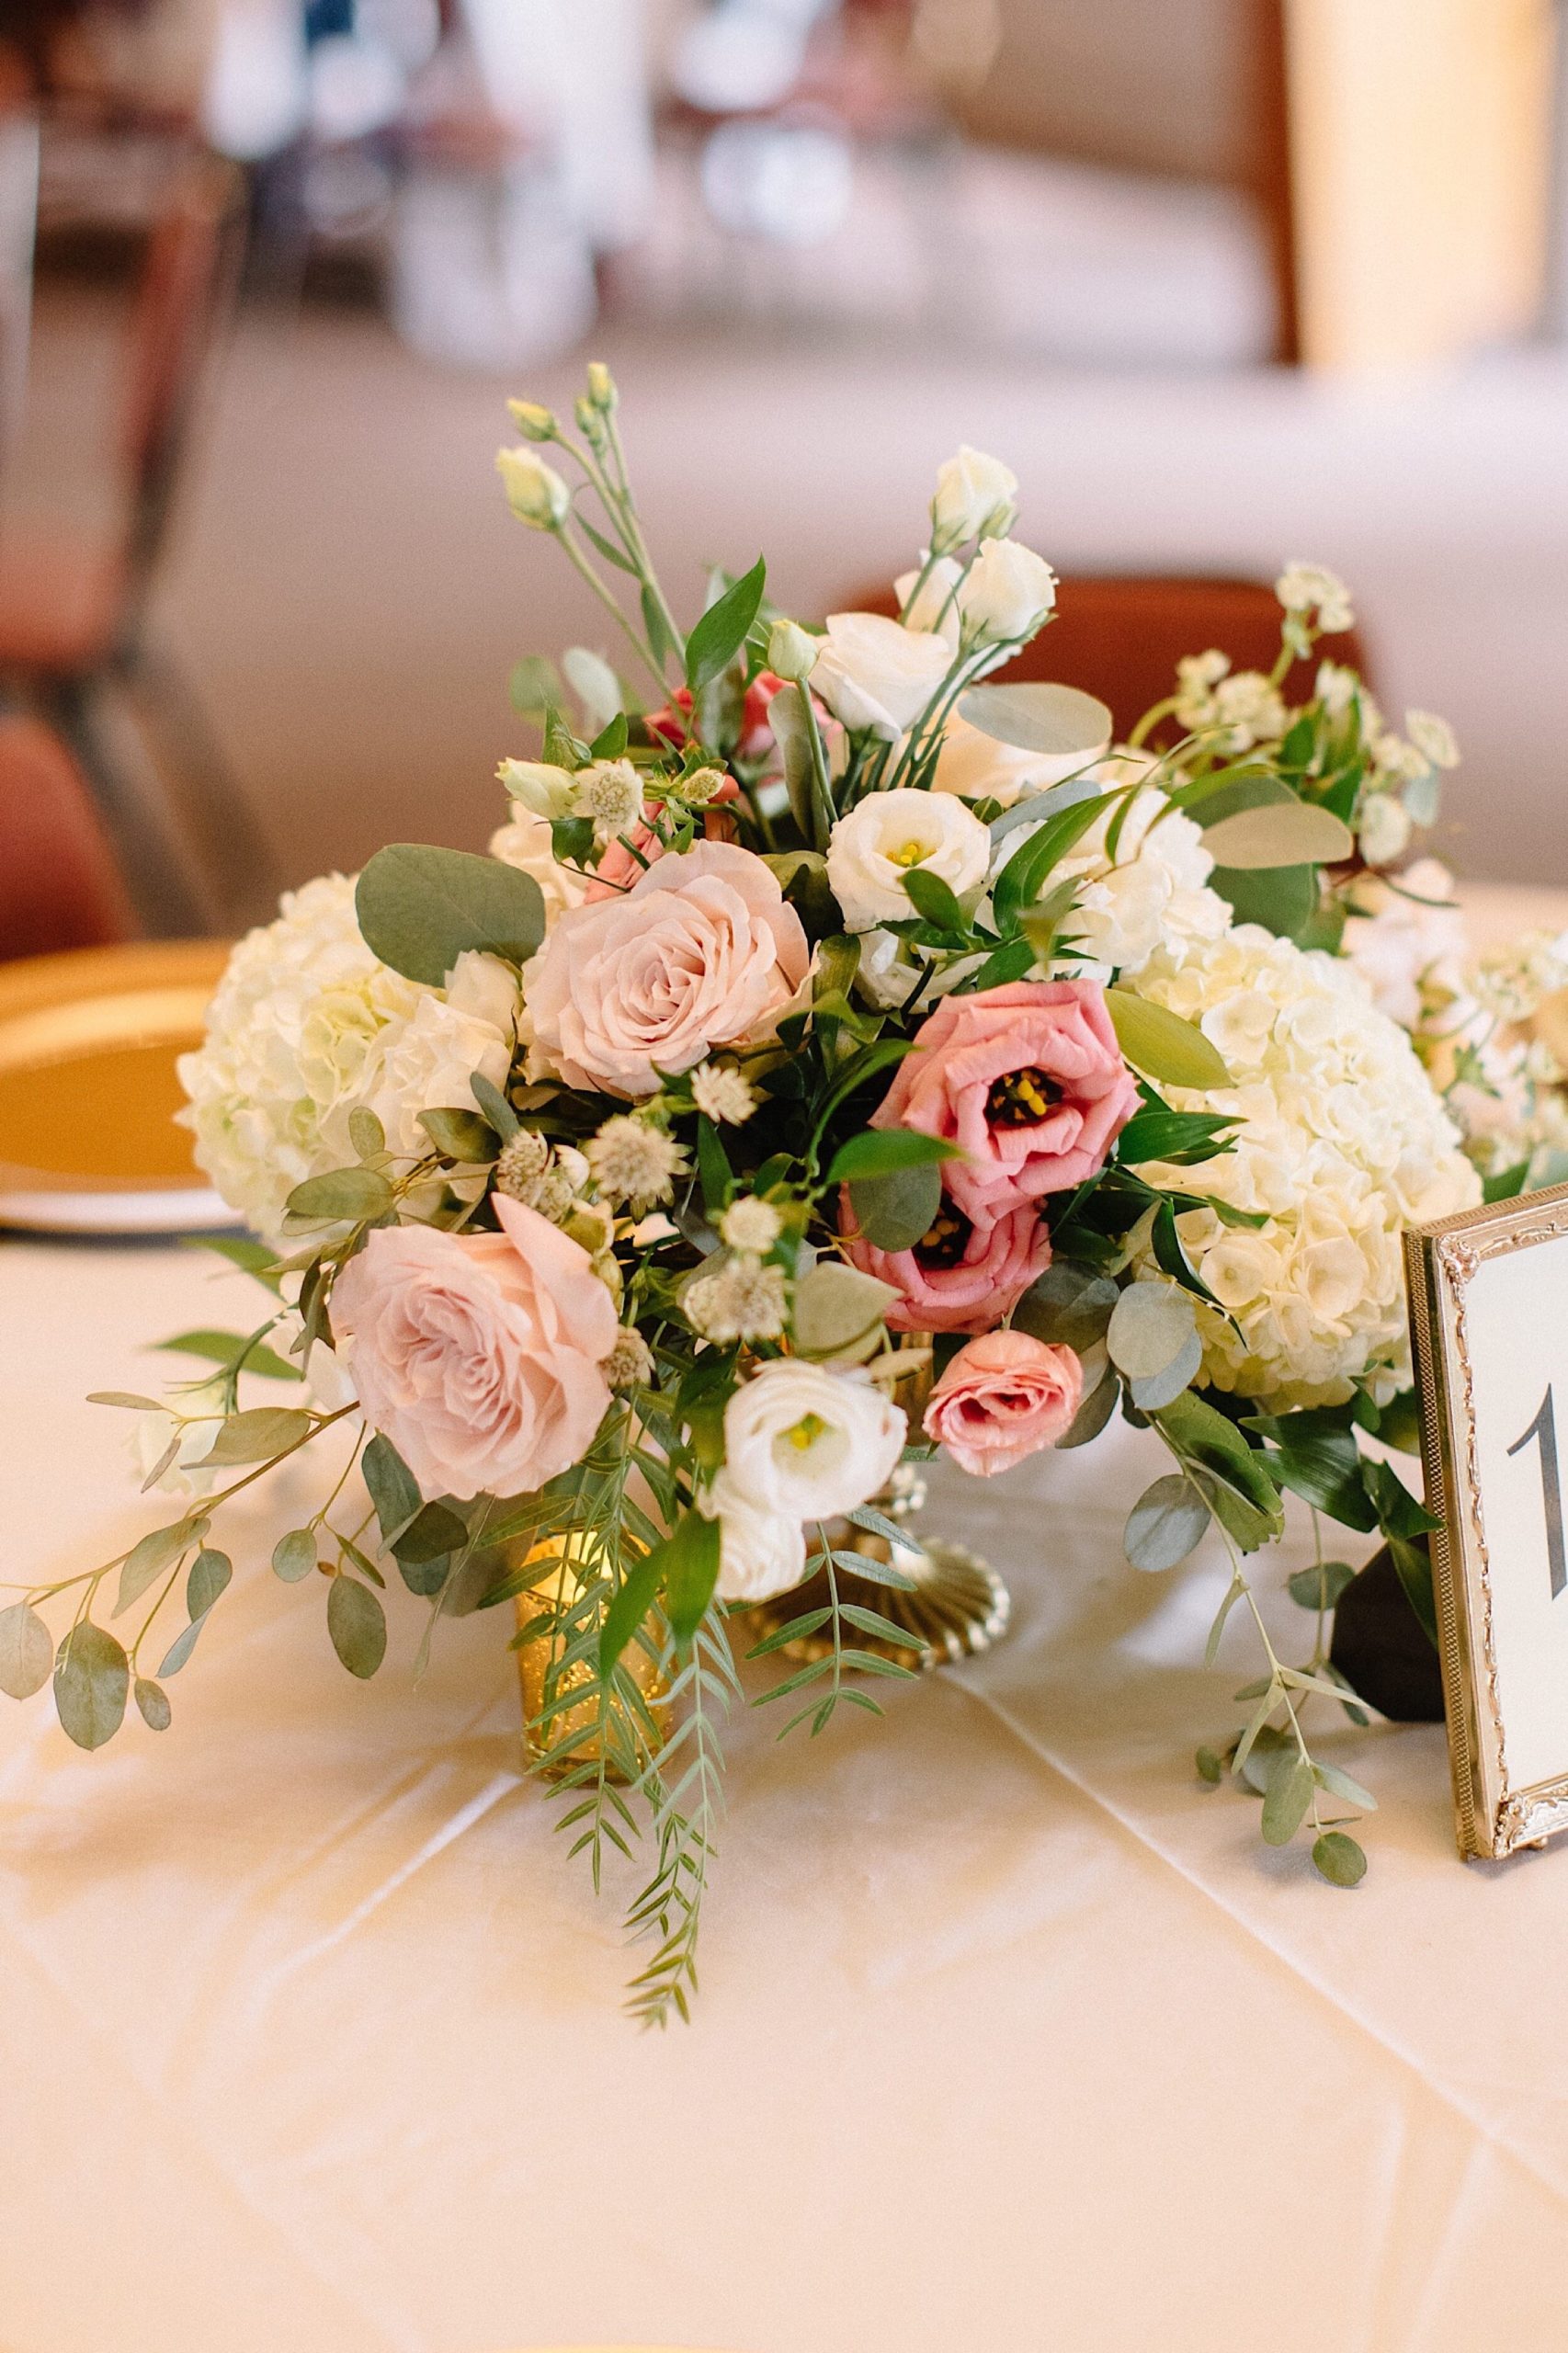 blush summer table flowers at Winona heritage room wedding reception